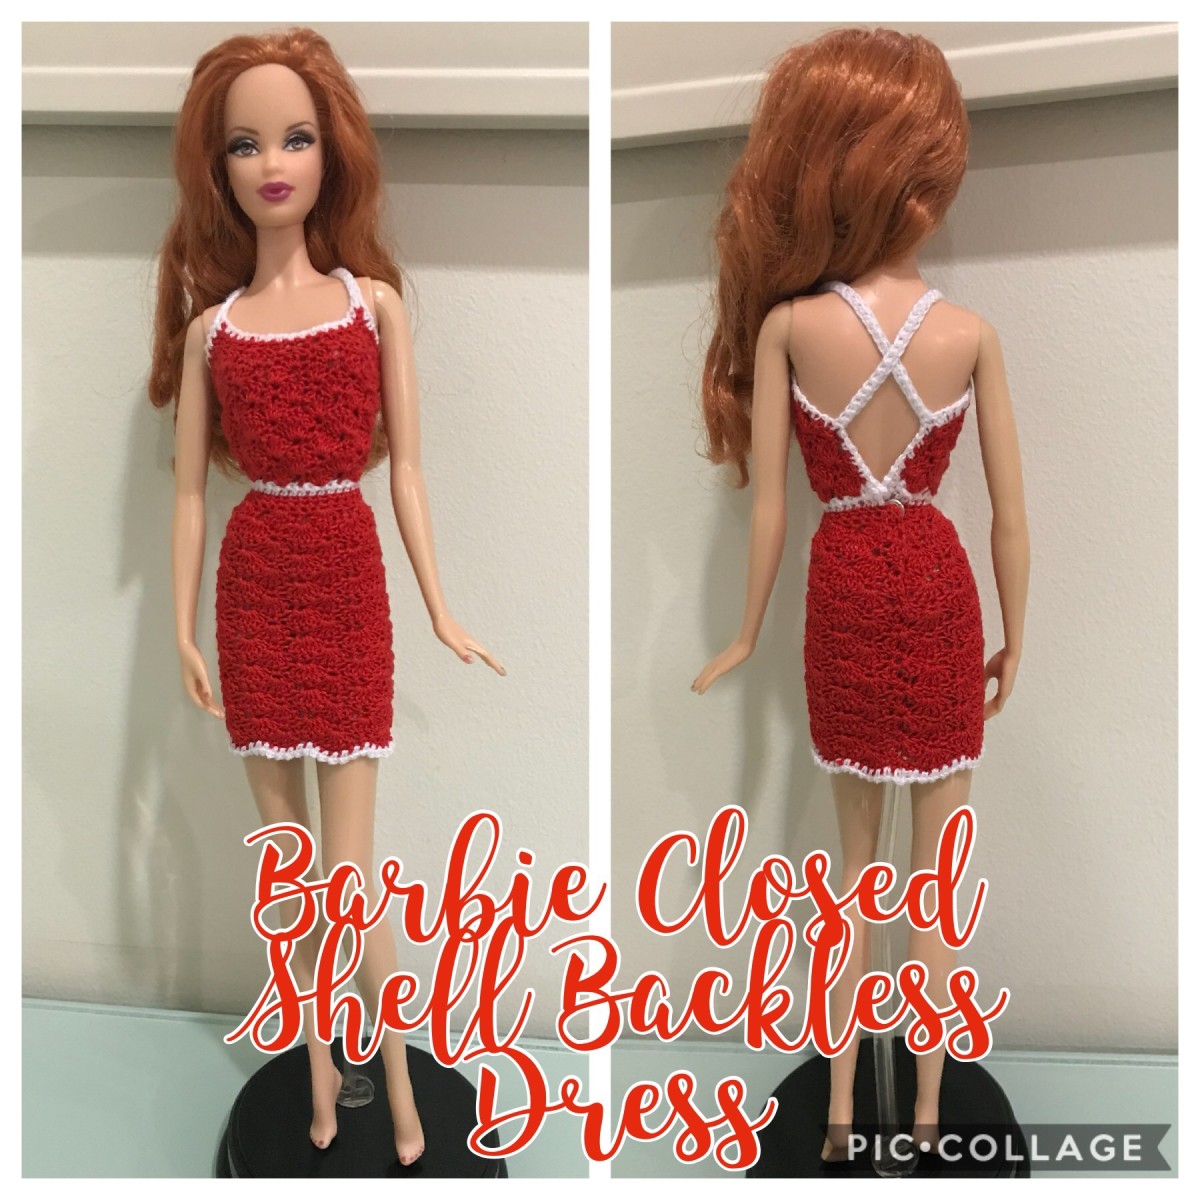 Barbie Closed-Shell Backless Dress (Free Crochet Pattern)